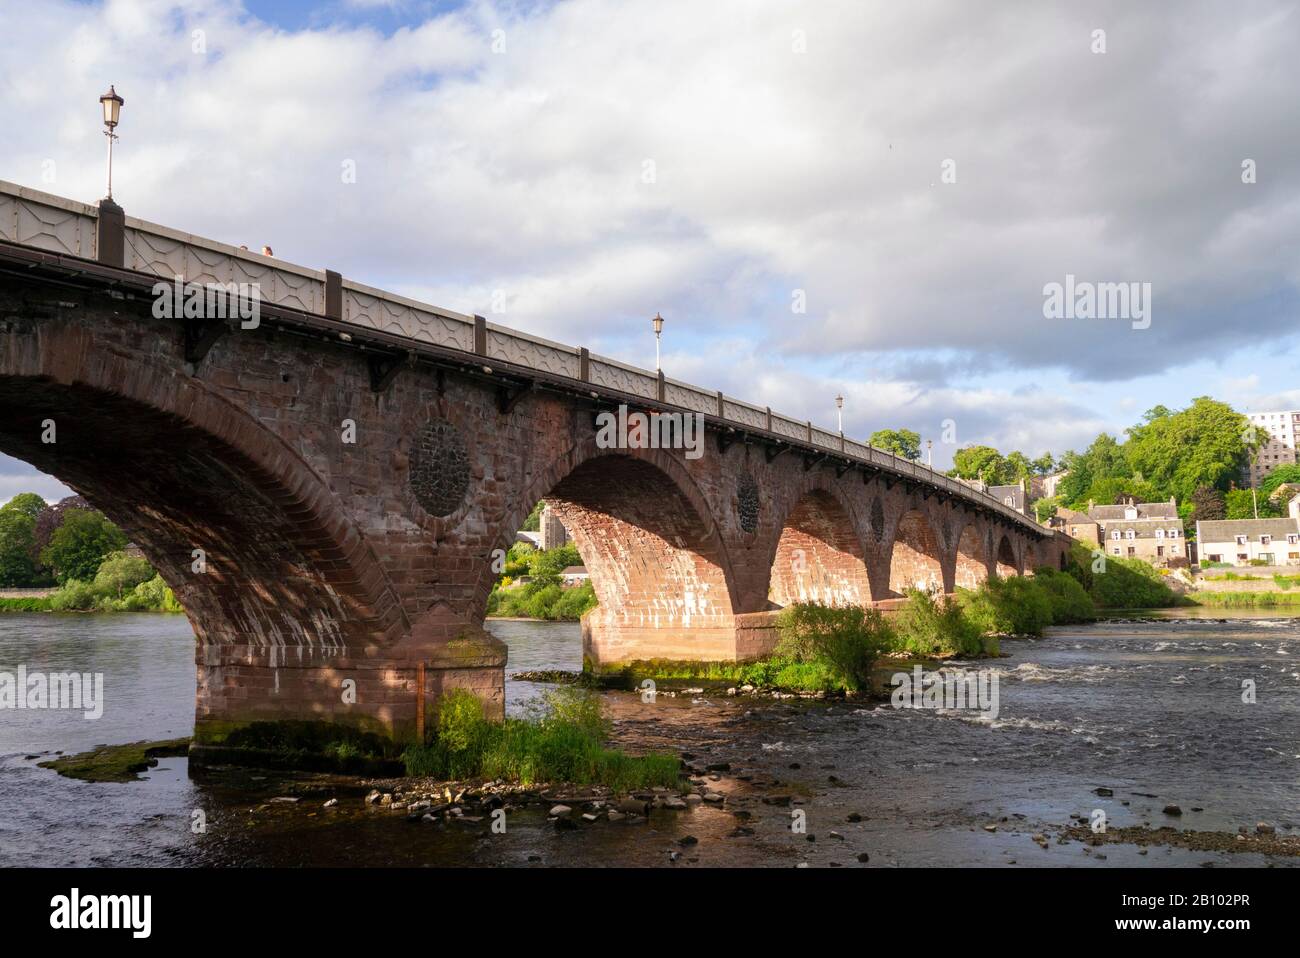 Die alte Brücke in Perth Perthshire Scotland UK Stockfoto